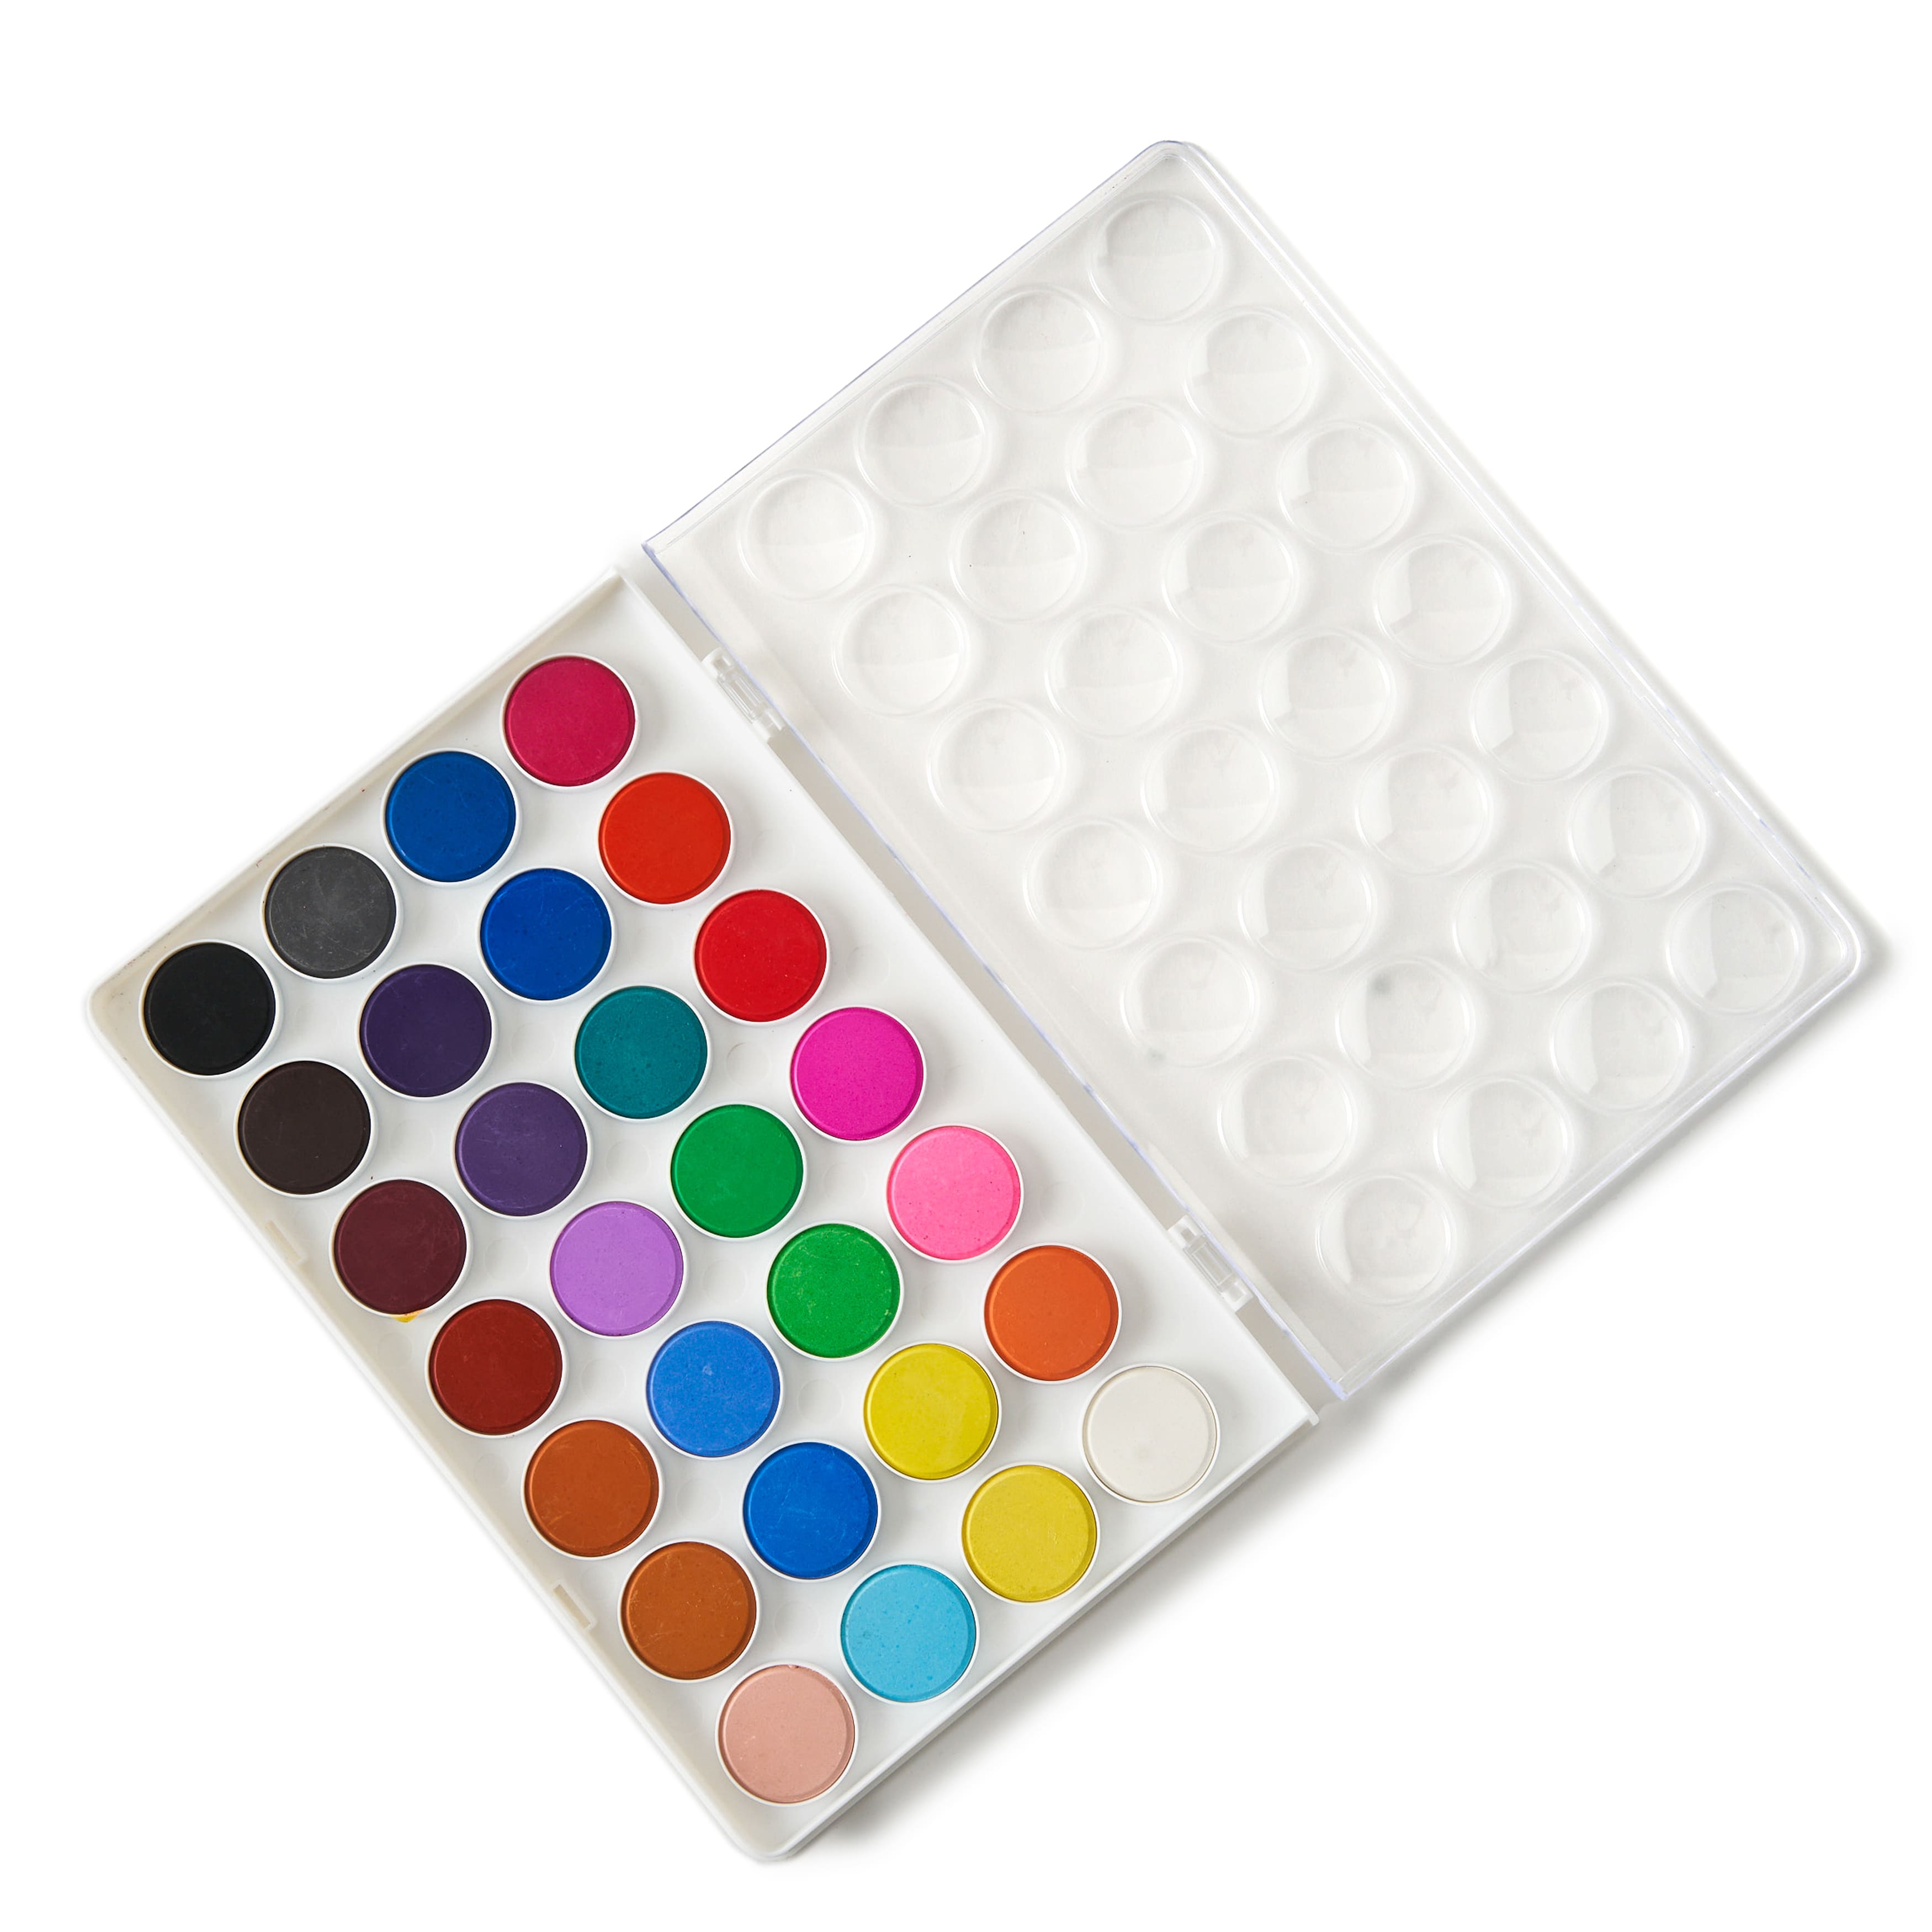 36 Color Watercolor Paint Value Pack by Artist's Loft™ Necessities™